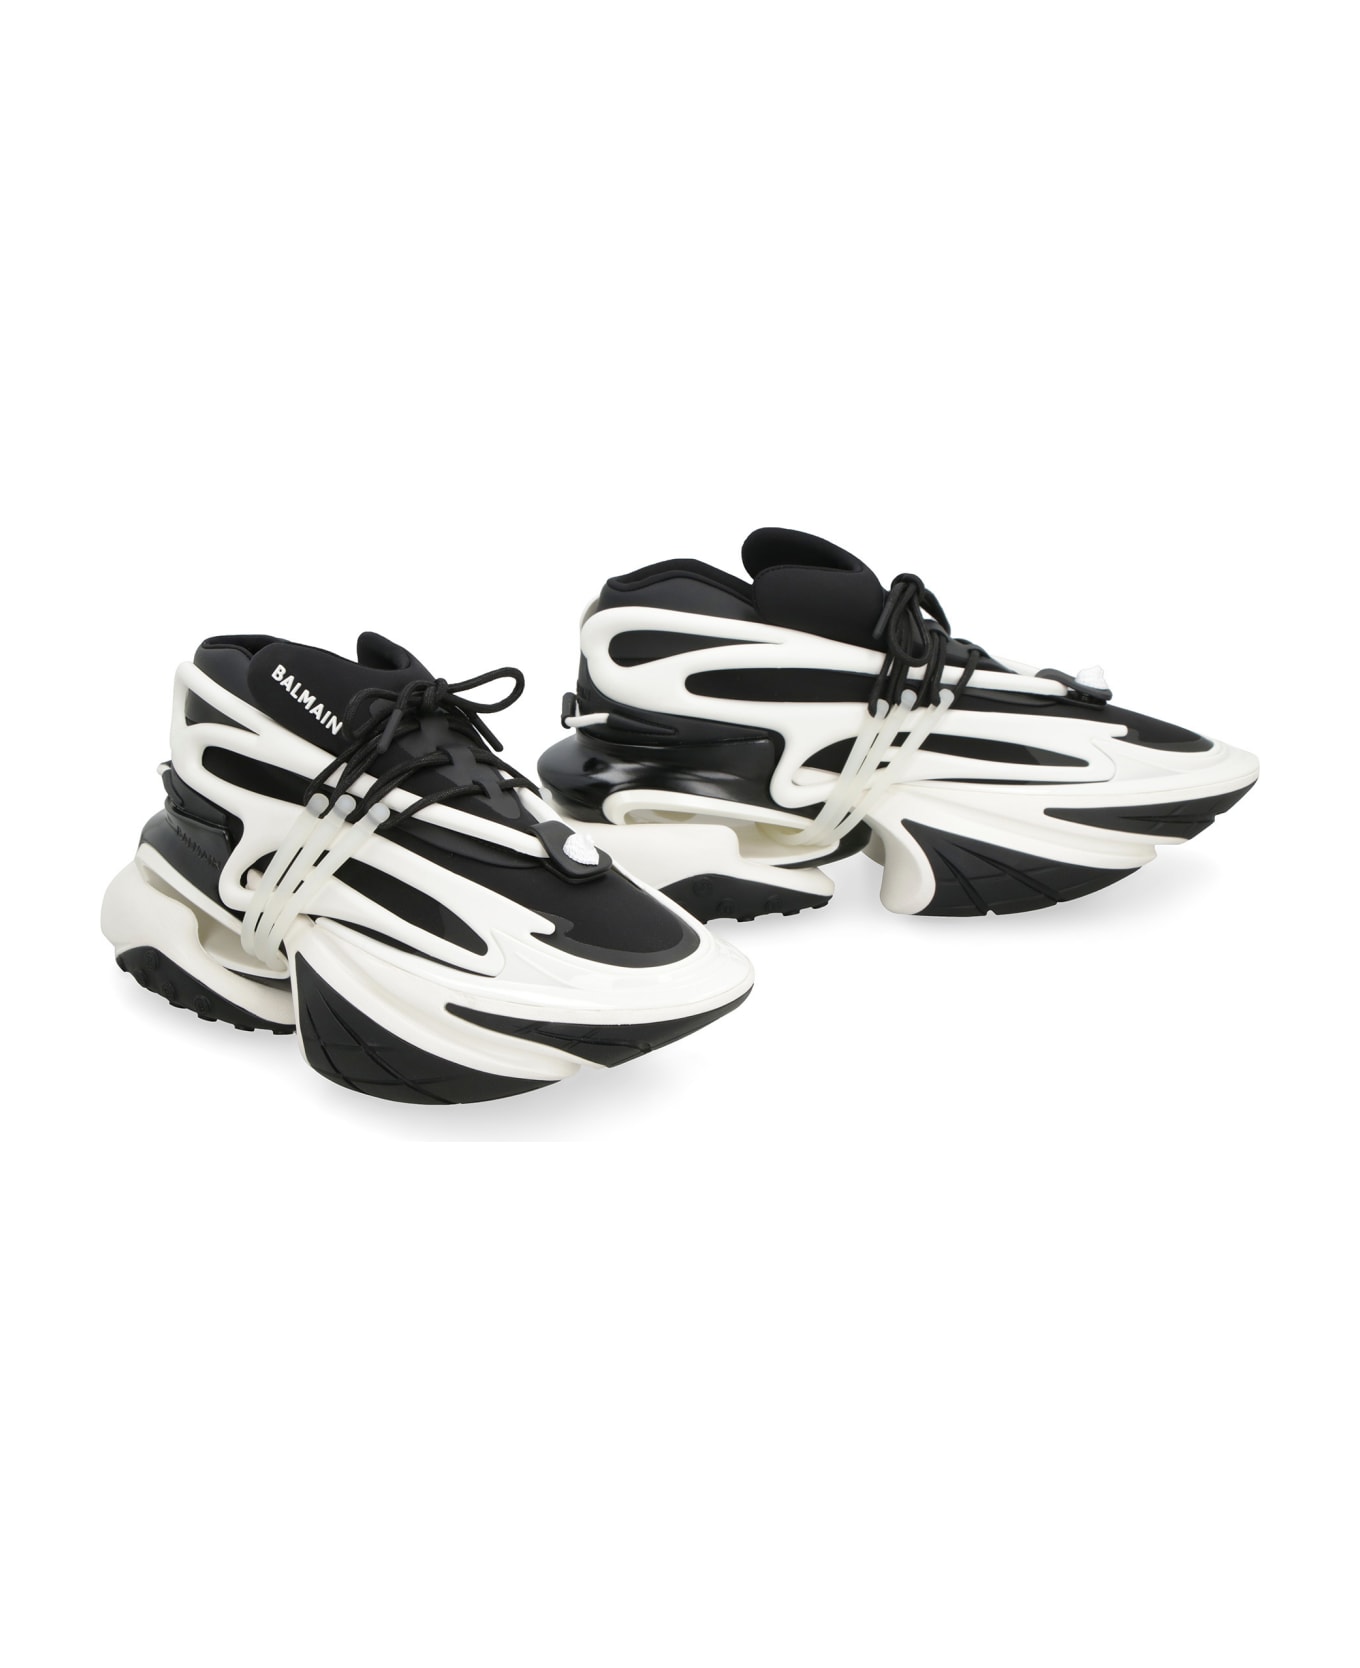 Balmain Unicorn Low-top Sneakers - Noir/blanc